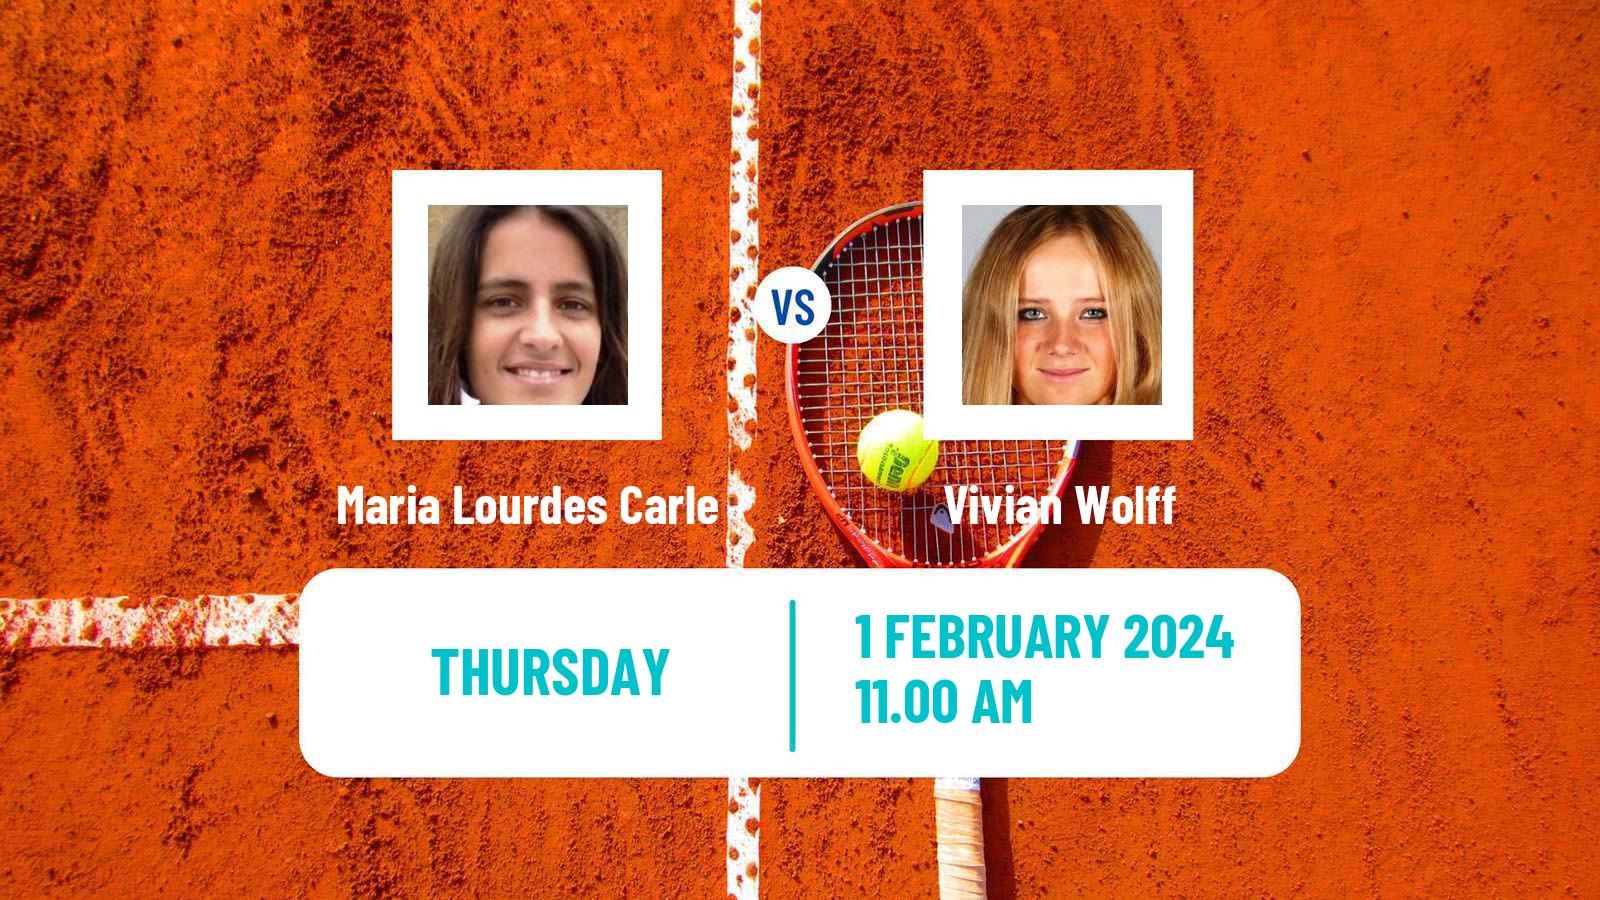 Tennis ITF W75 Rome Ga Women Maria Lourdes Carle - Vivian Wolff